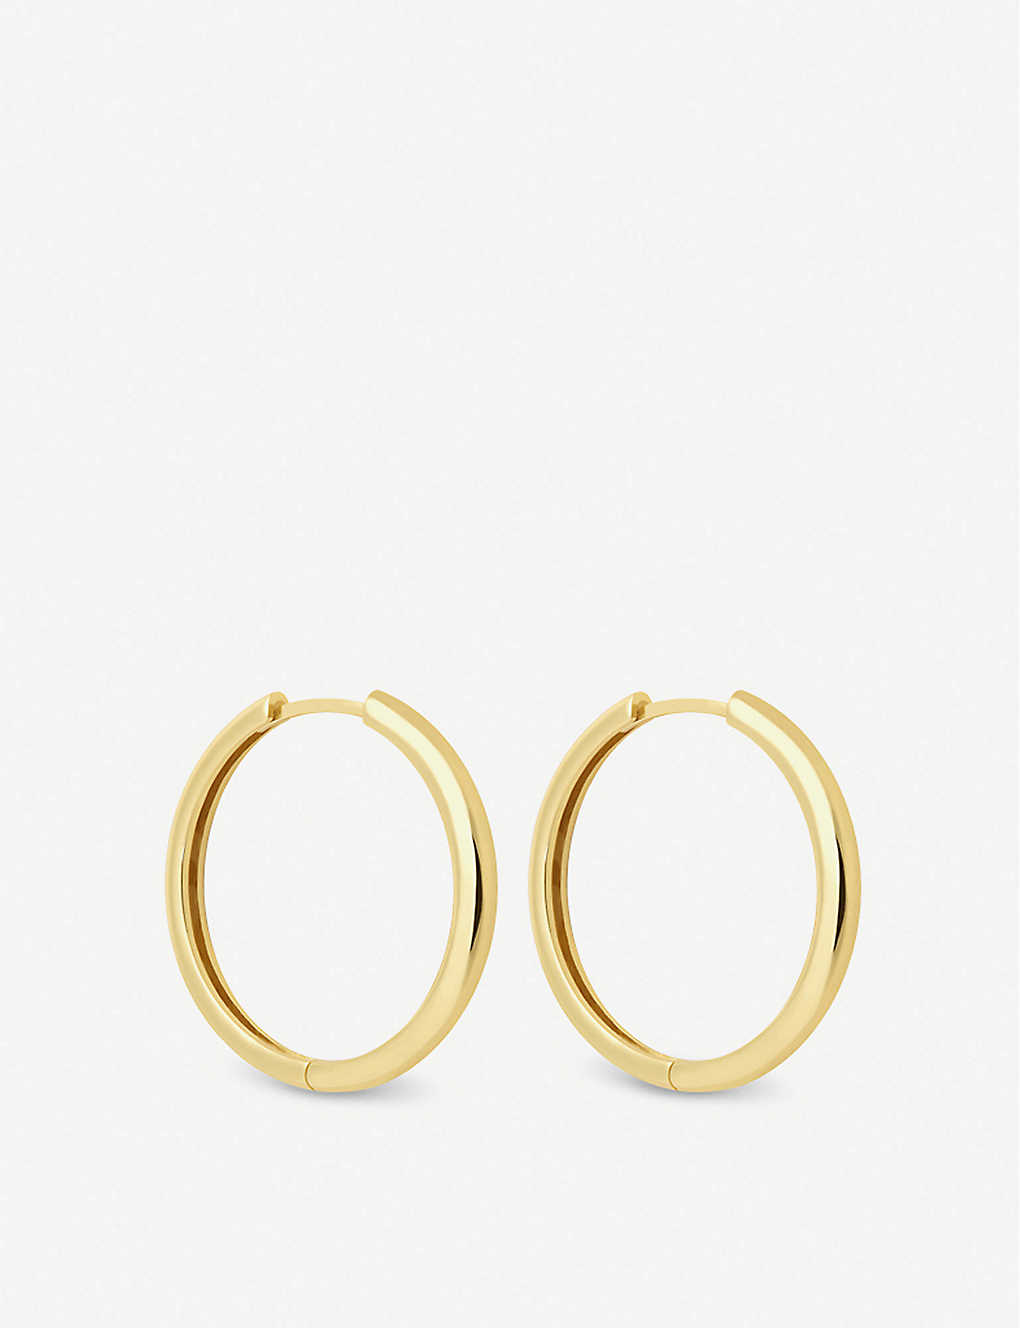 Astrid & Miyu Simple 18ct Yellow Gold-plated Sterling Silver Hoop Earrings